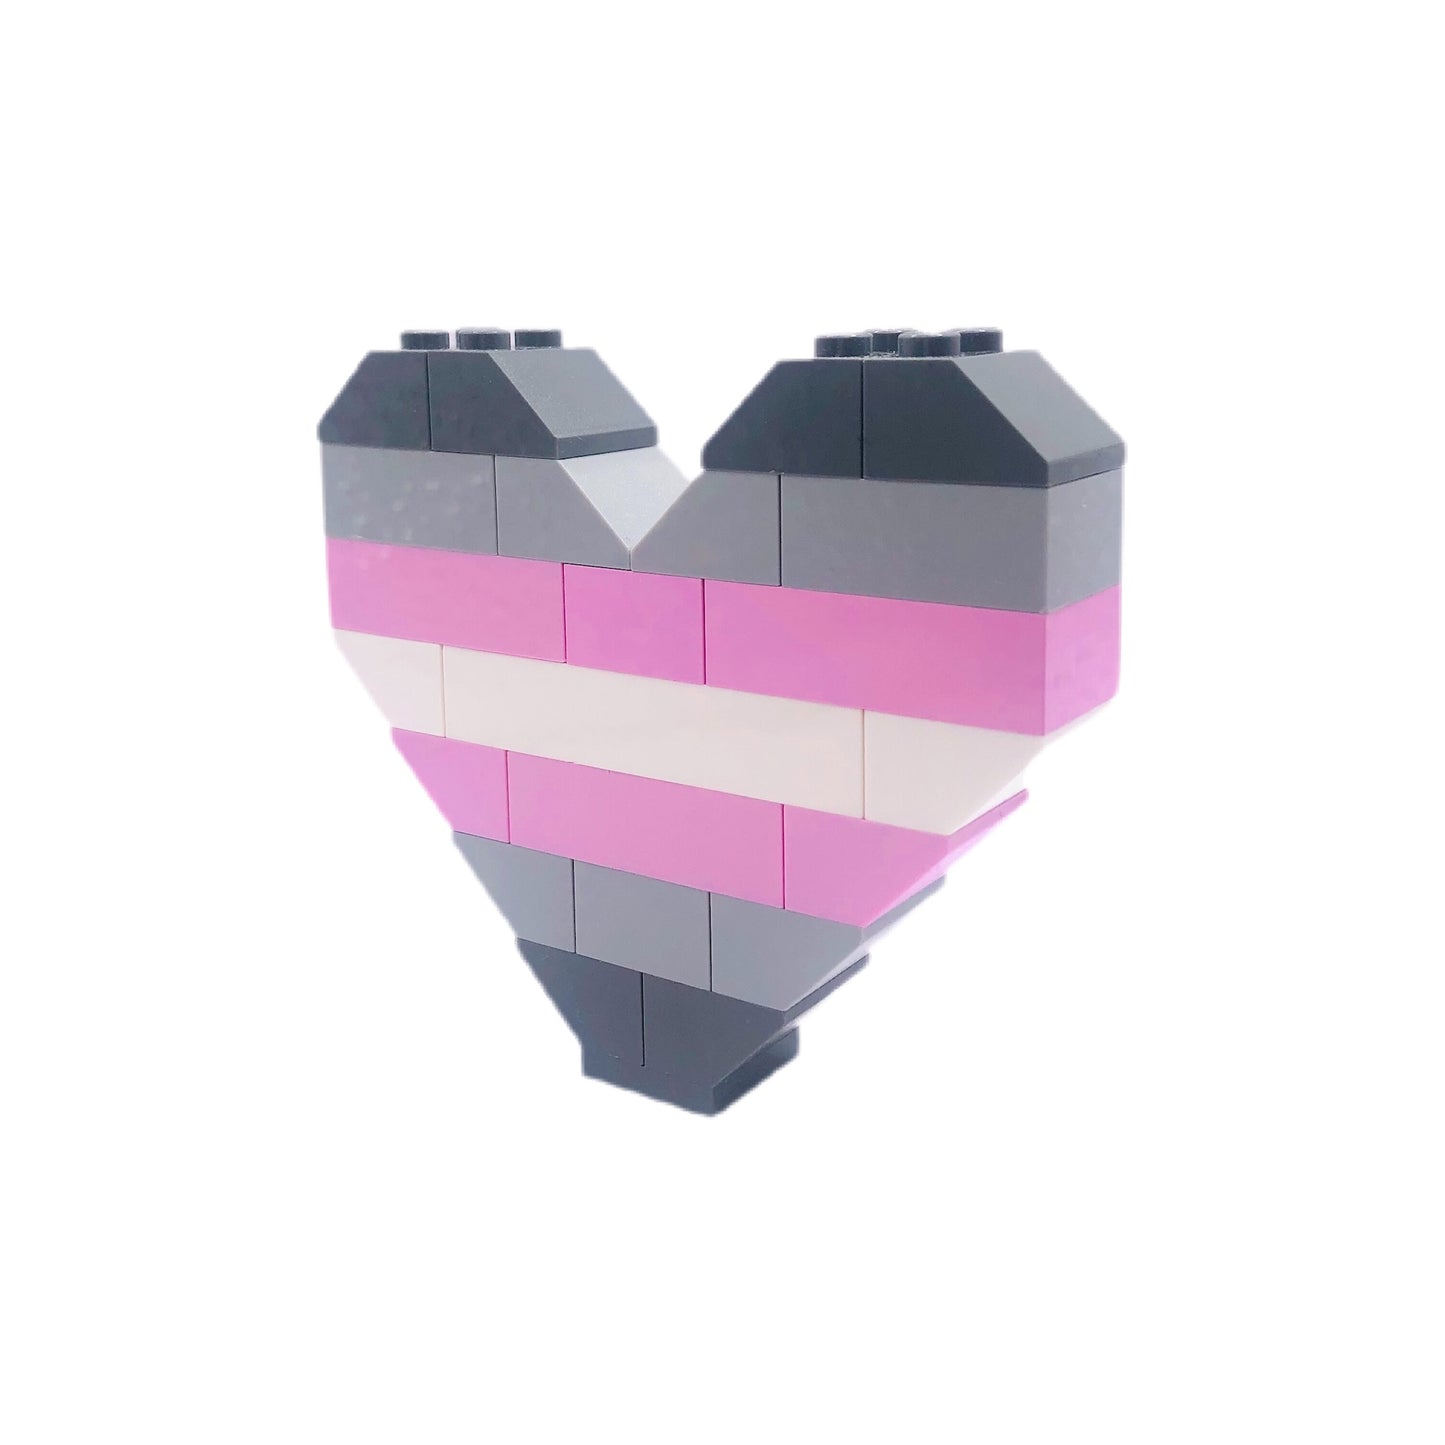 BrickNetty Pride Heart - Demigirl